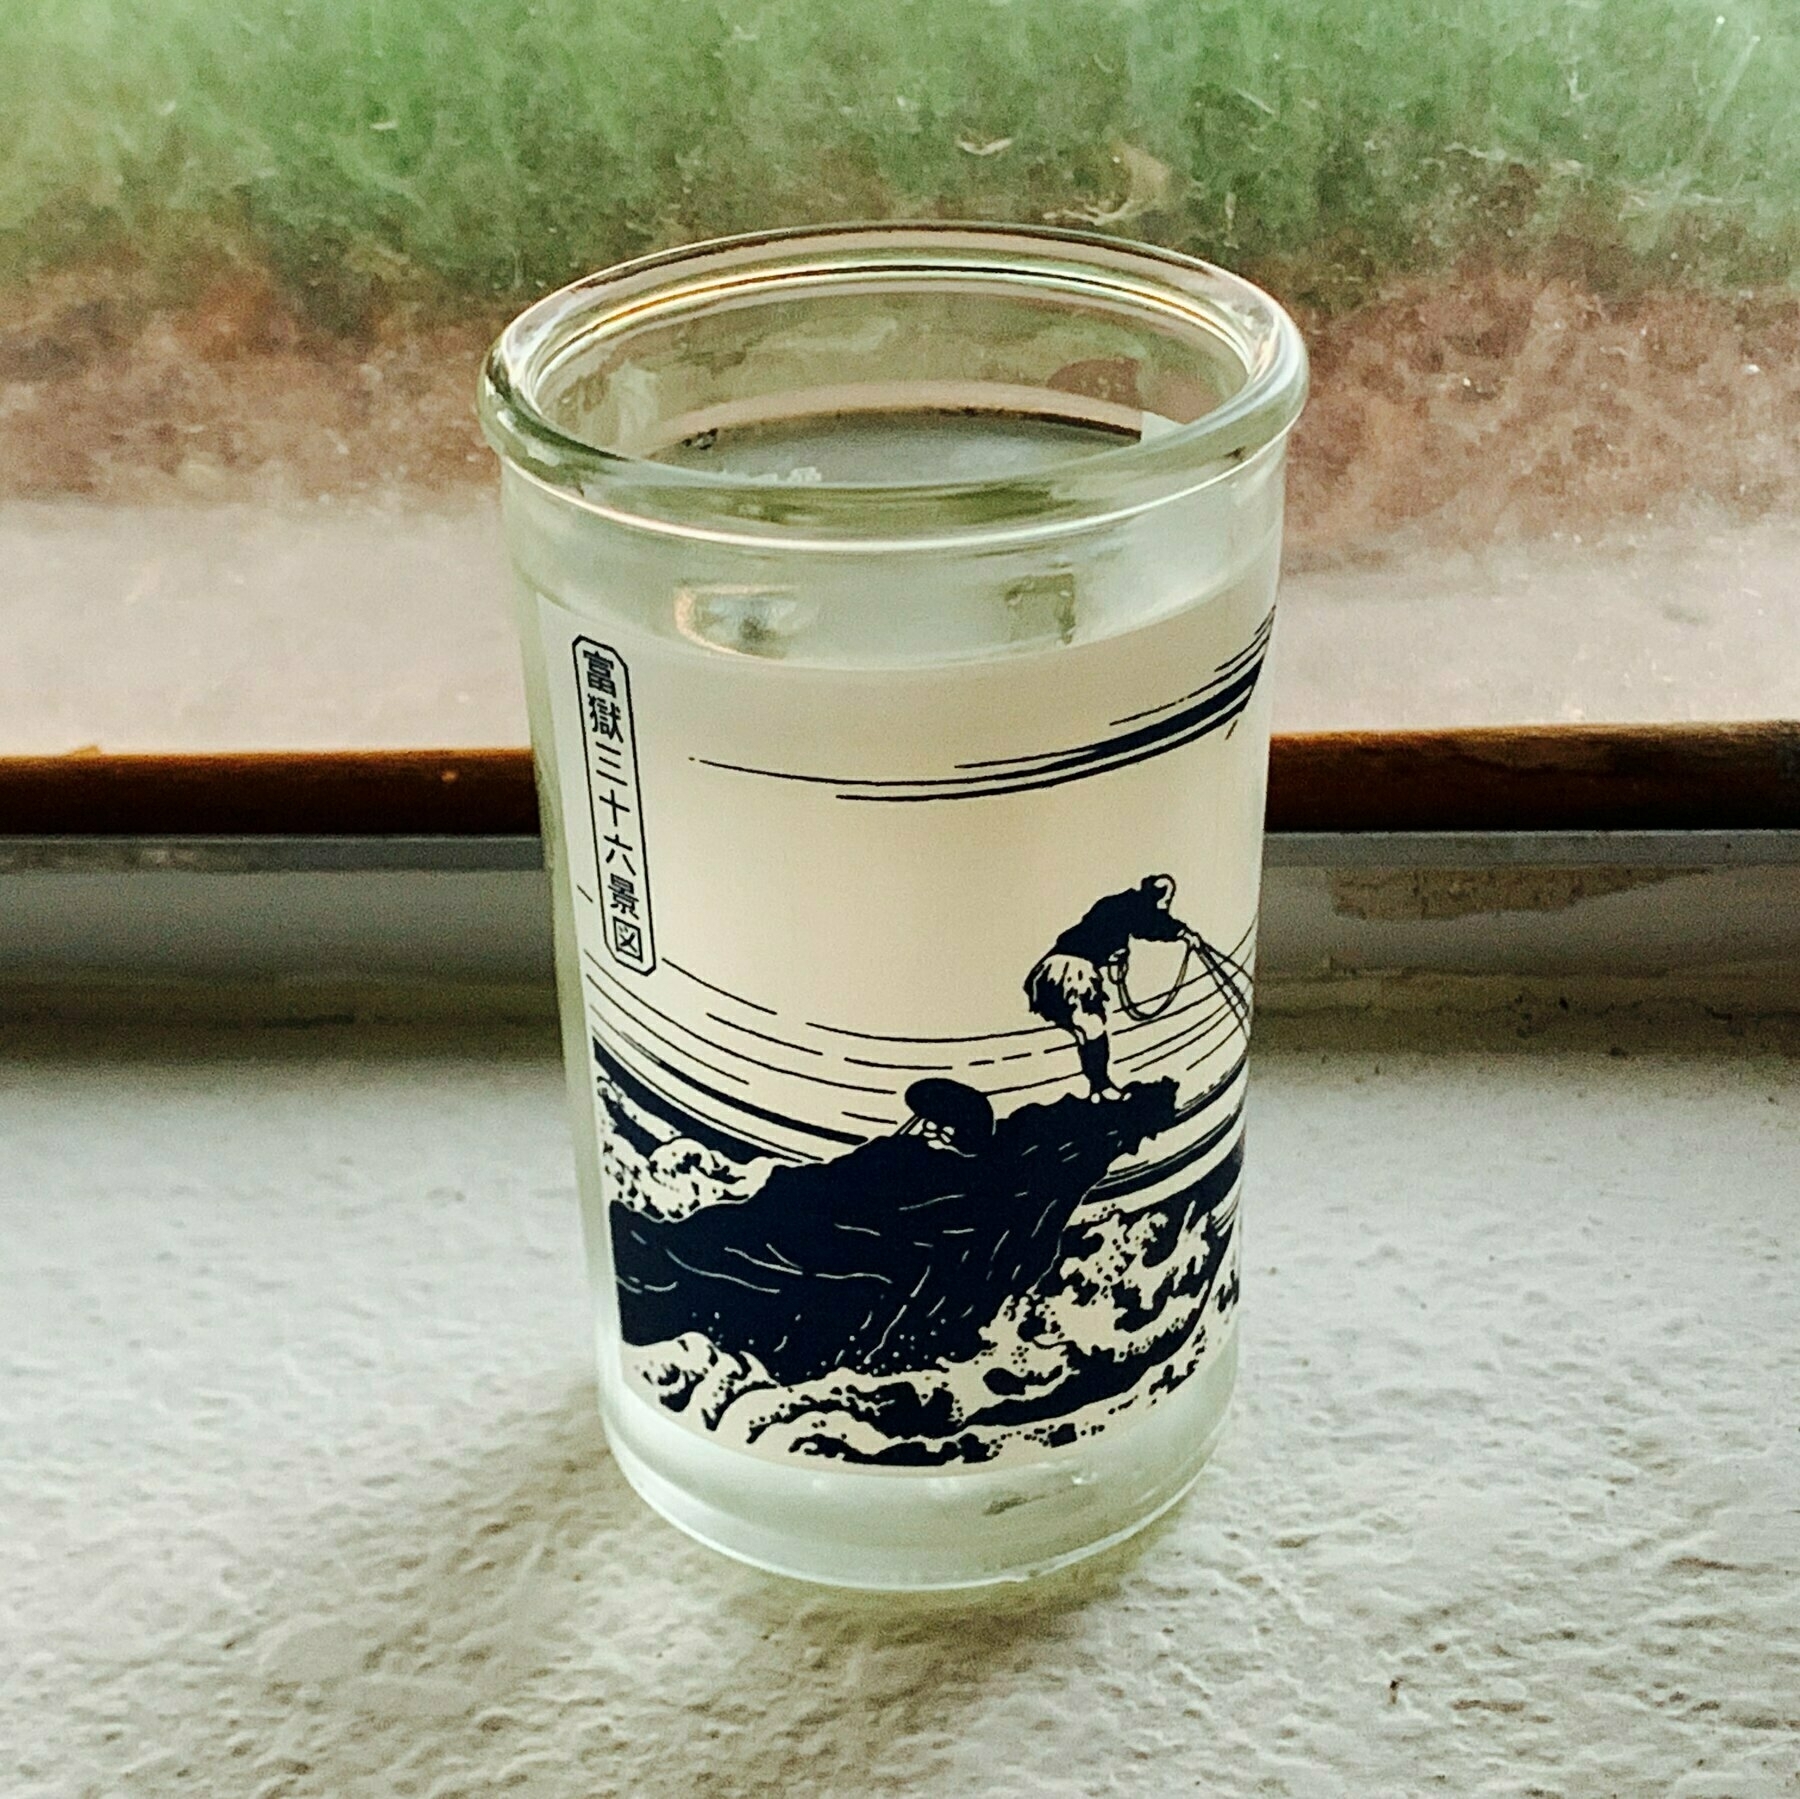 cup sake on a window ledge